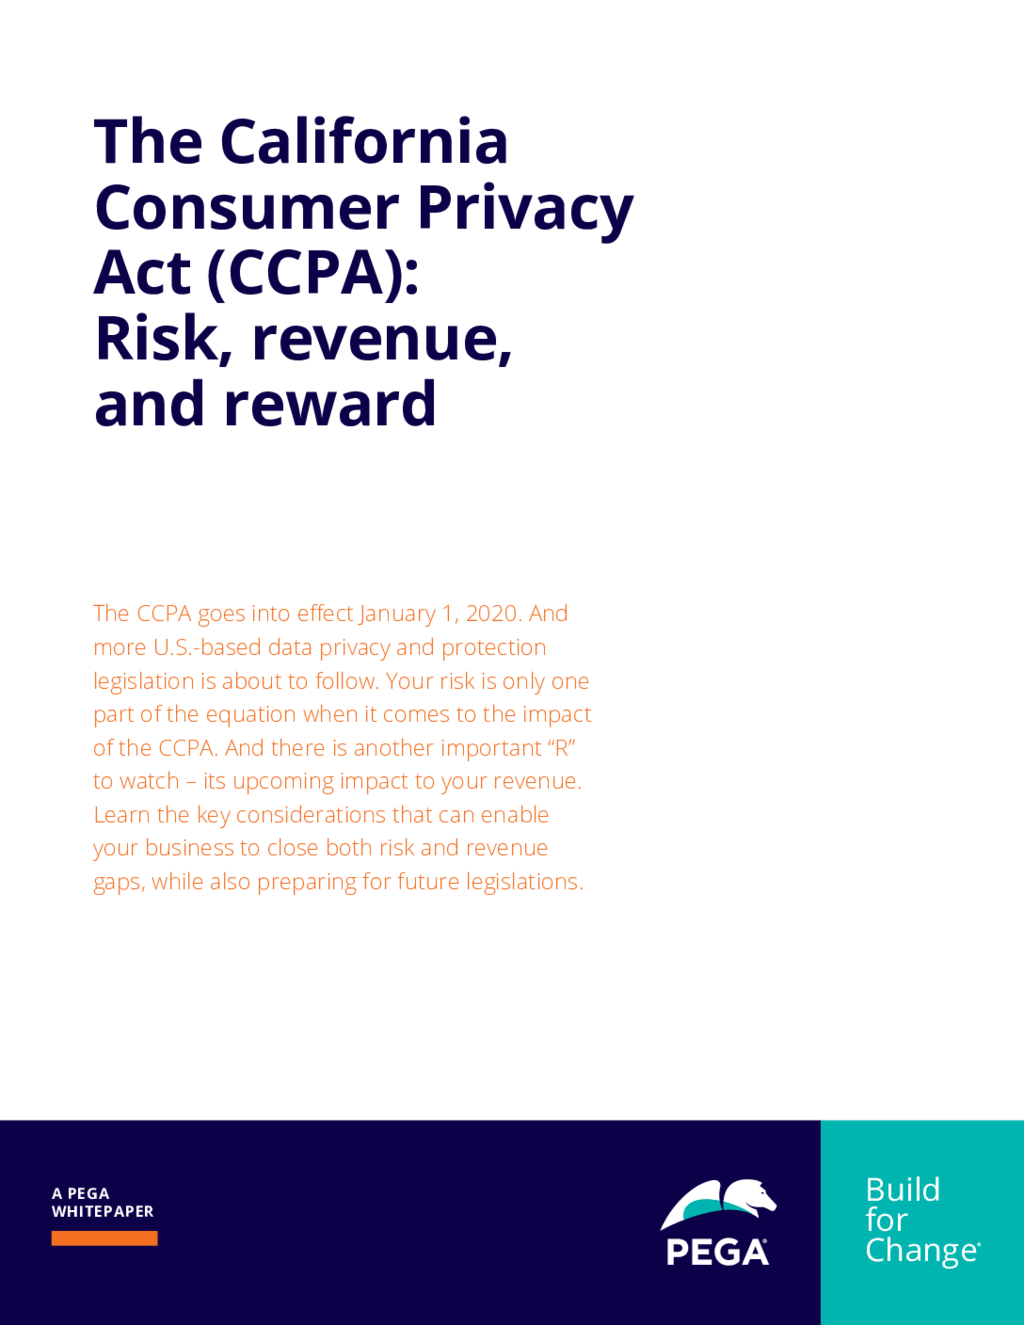 CCPA: Risk, revenue, and reward